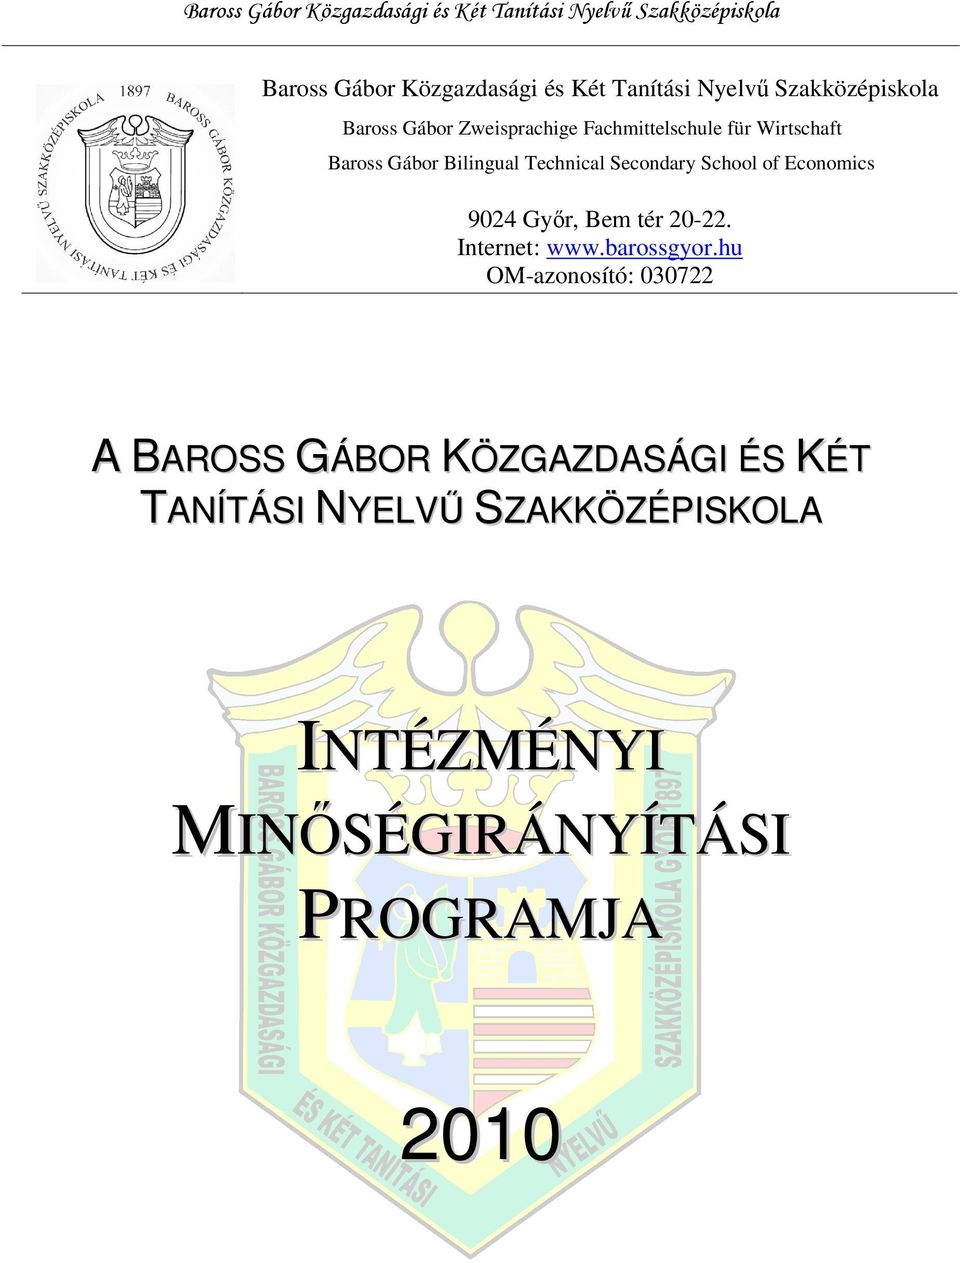 Technical Secondary School of Economics 9024 Győr, Bem tér 20-22. Internet: www.barossgyor.